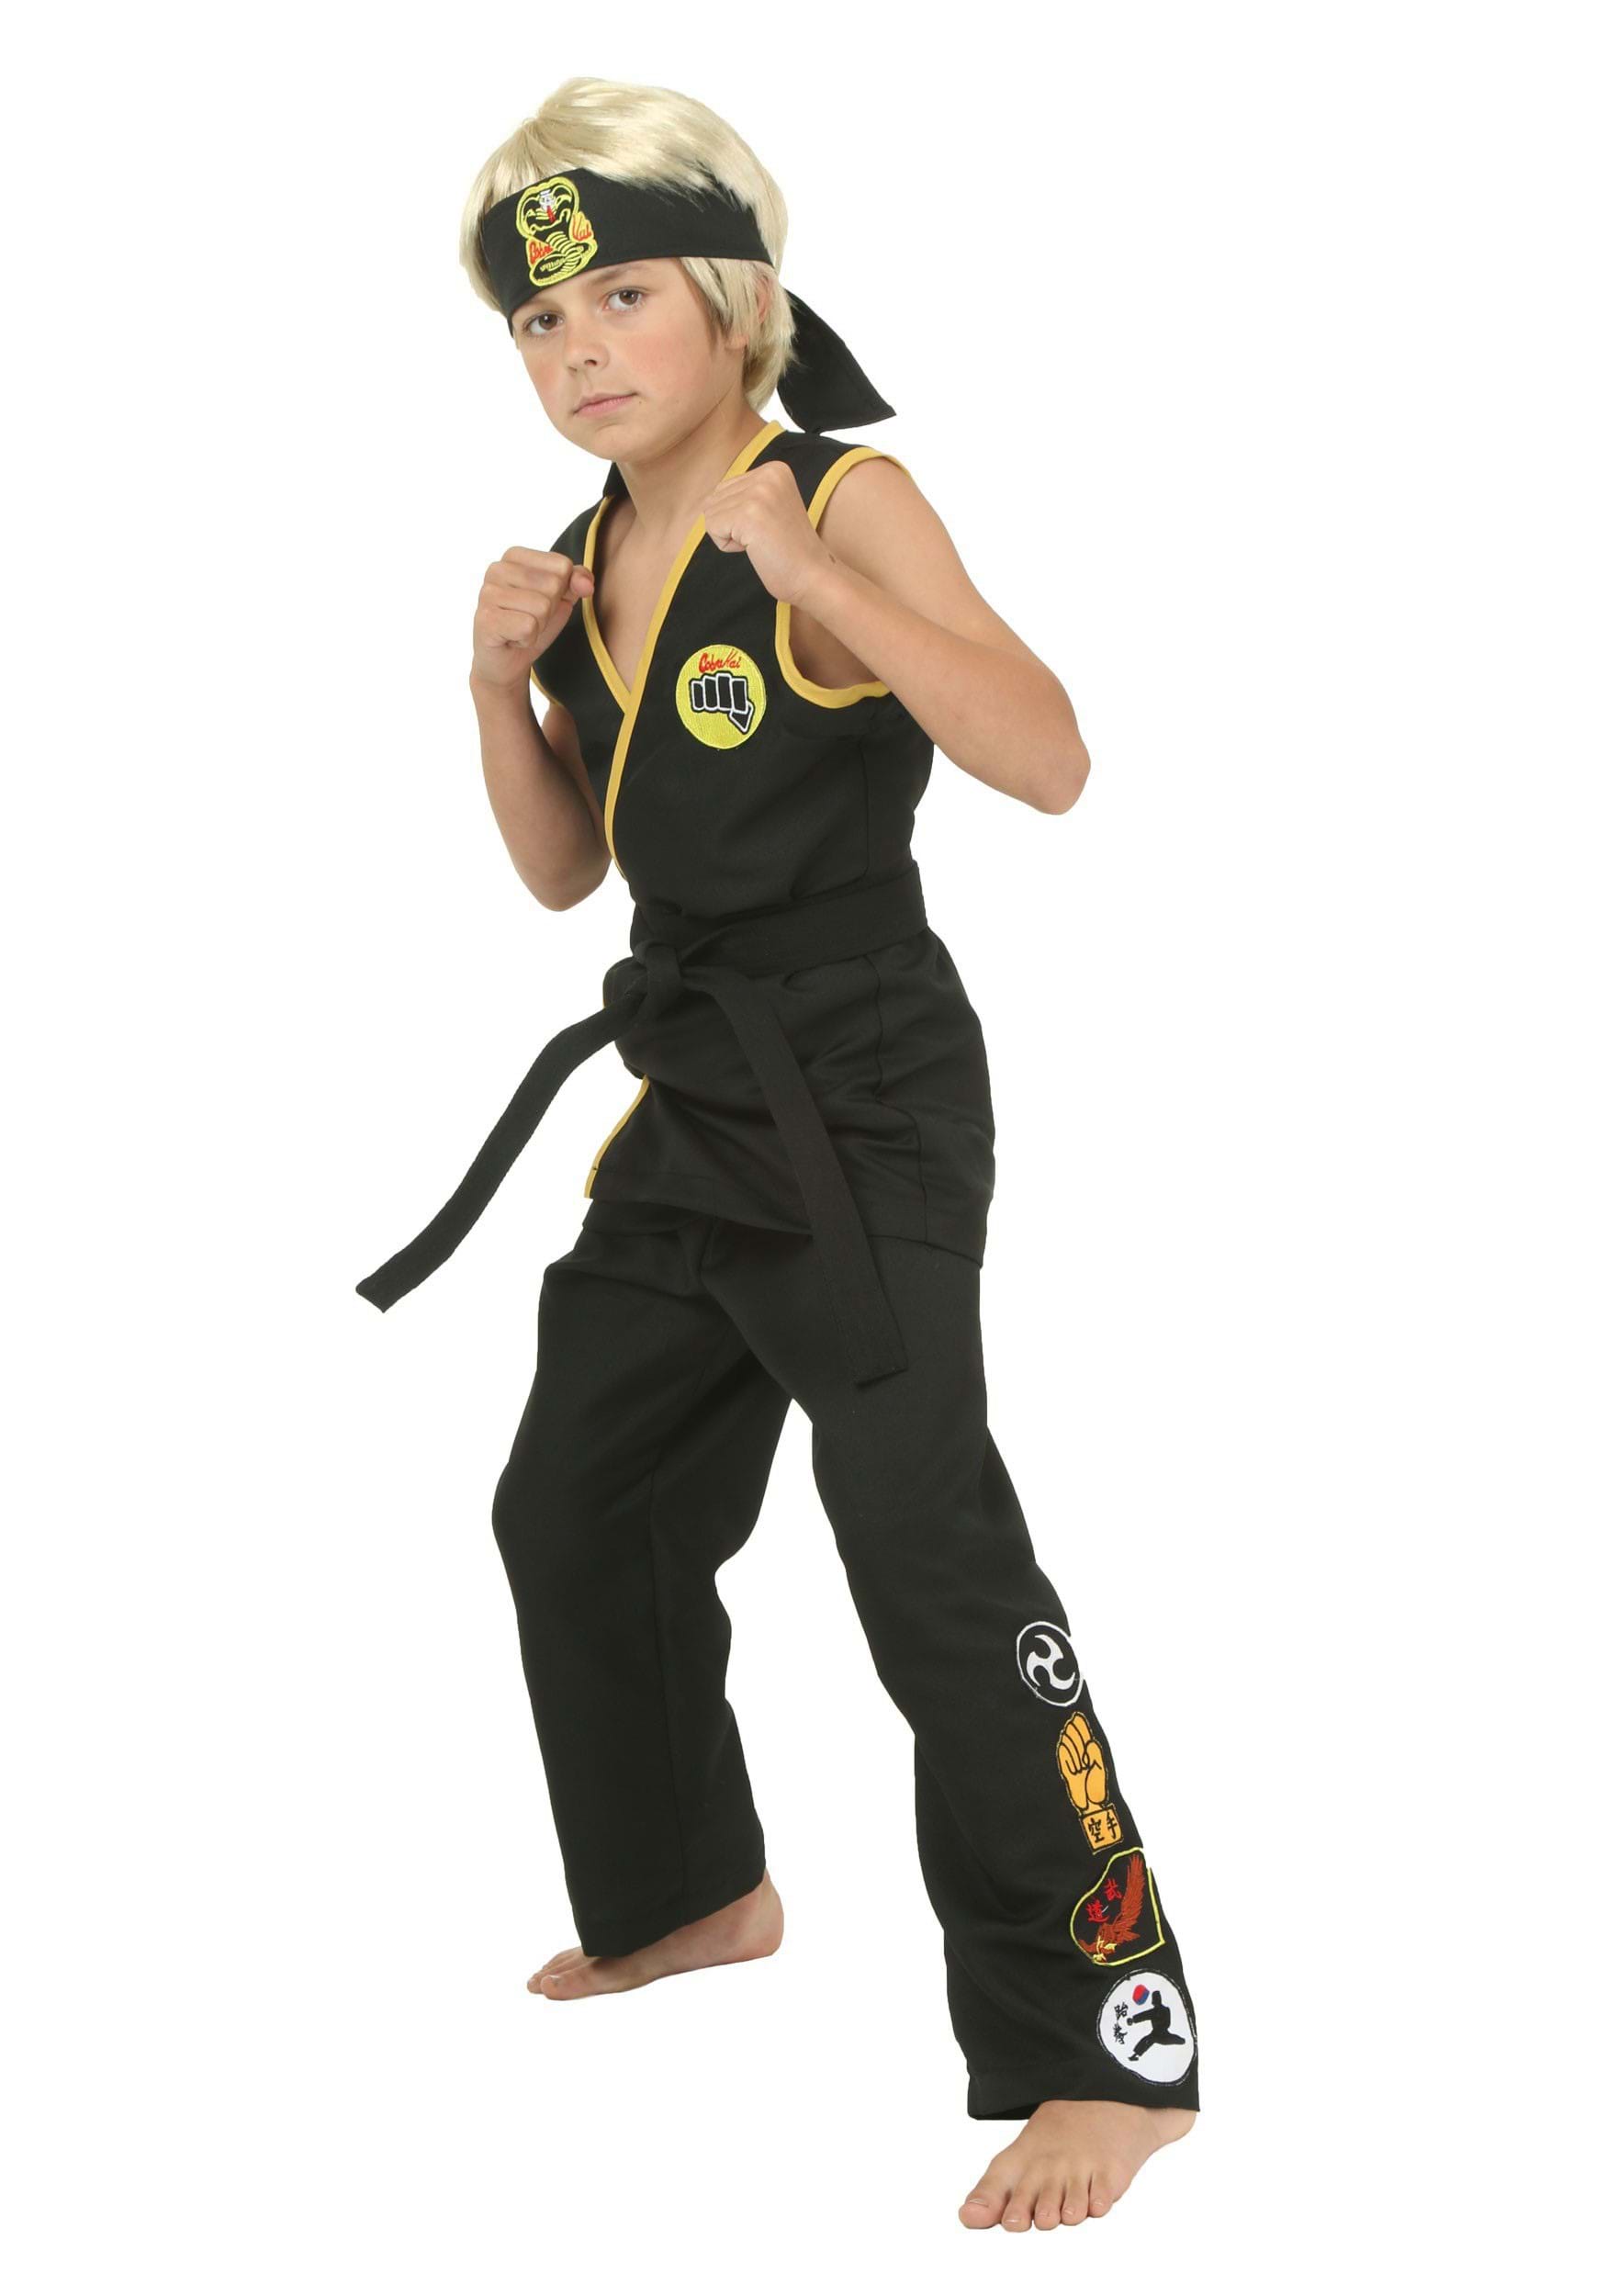 Cobra Kai Kid's Costume